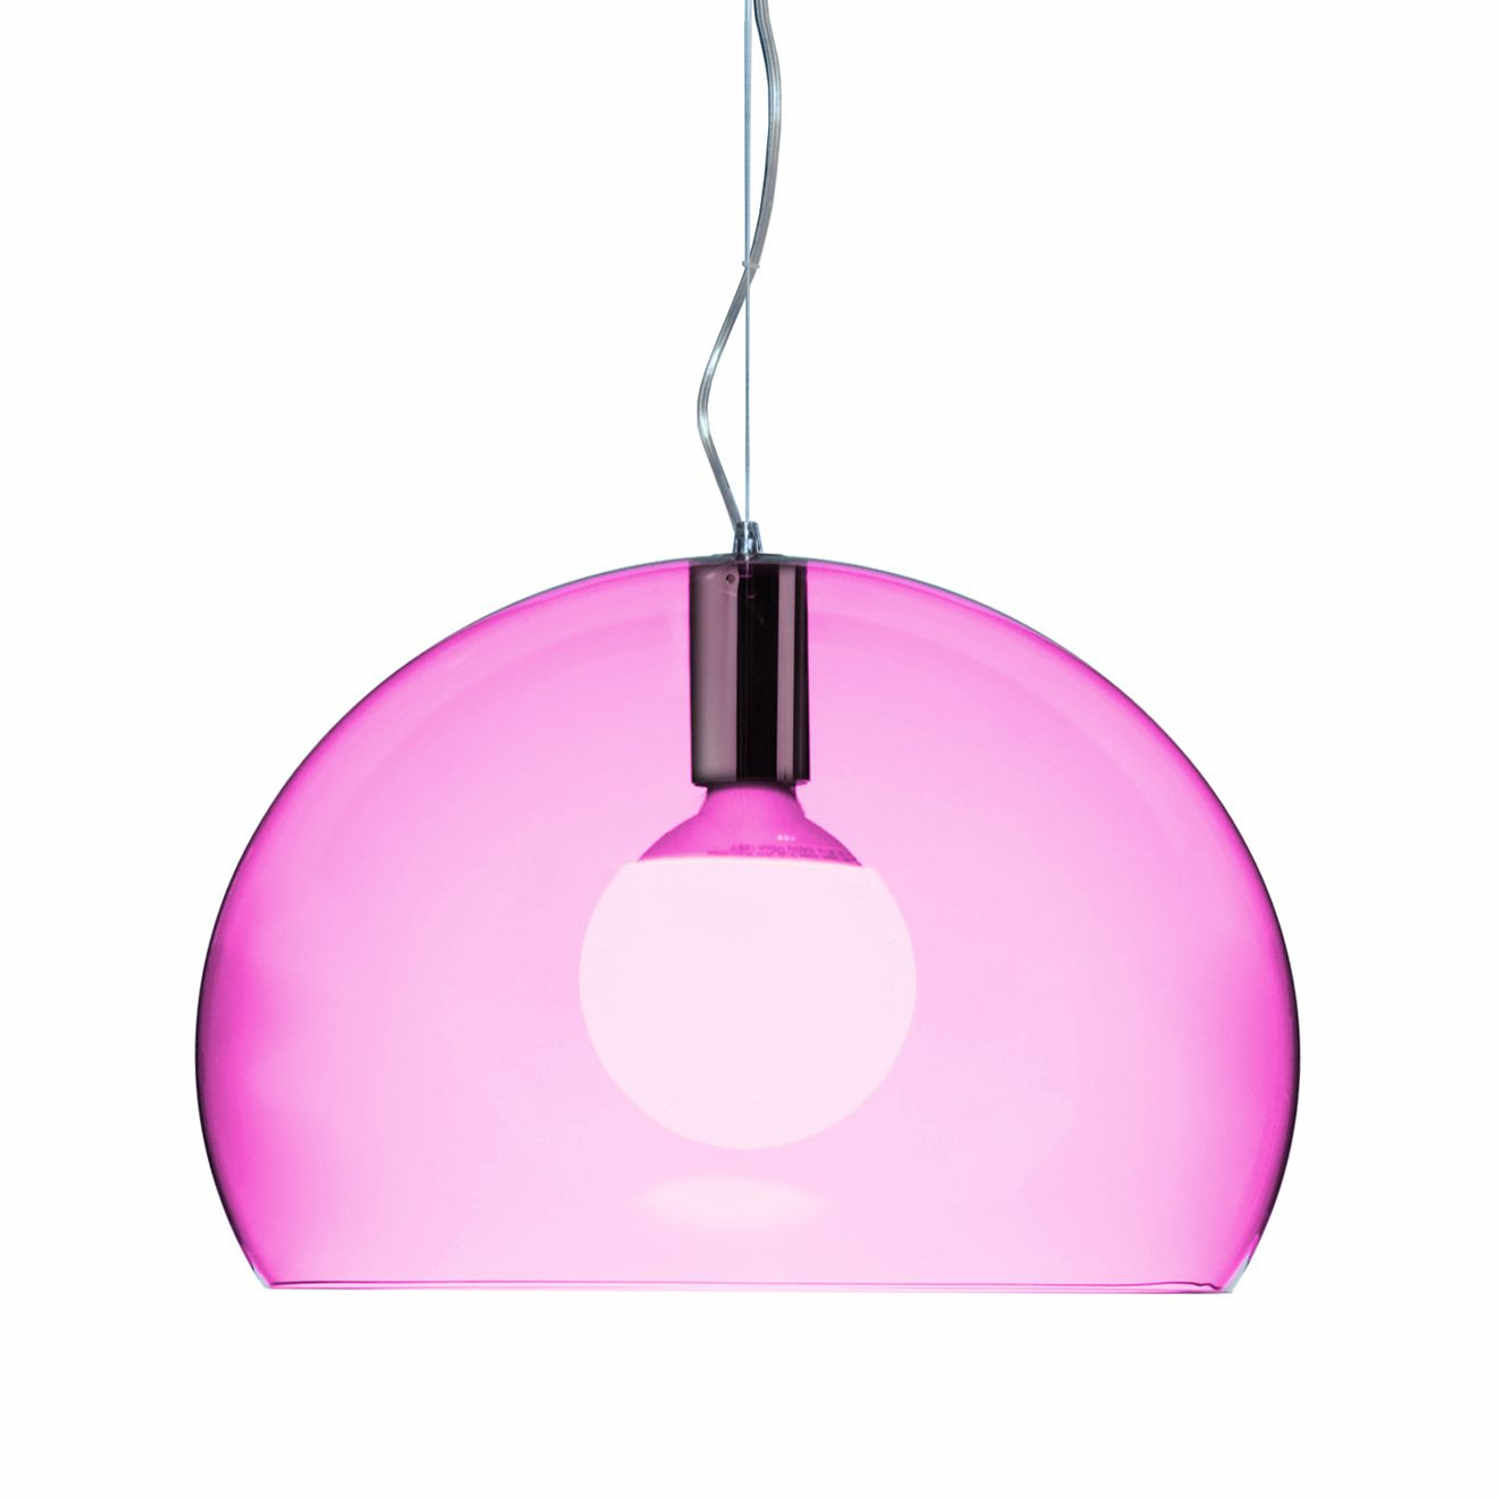 Small FL/Y LED Pendelleuchte, Farbe transparent/pink von Kartell